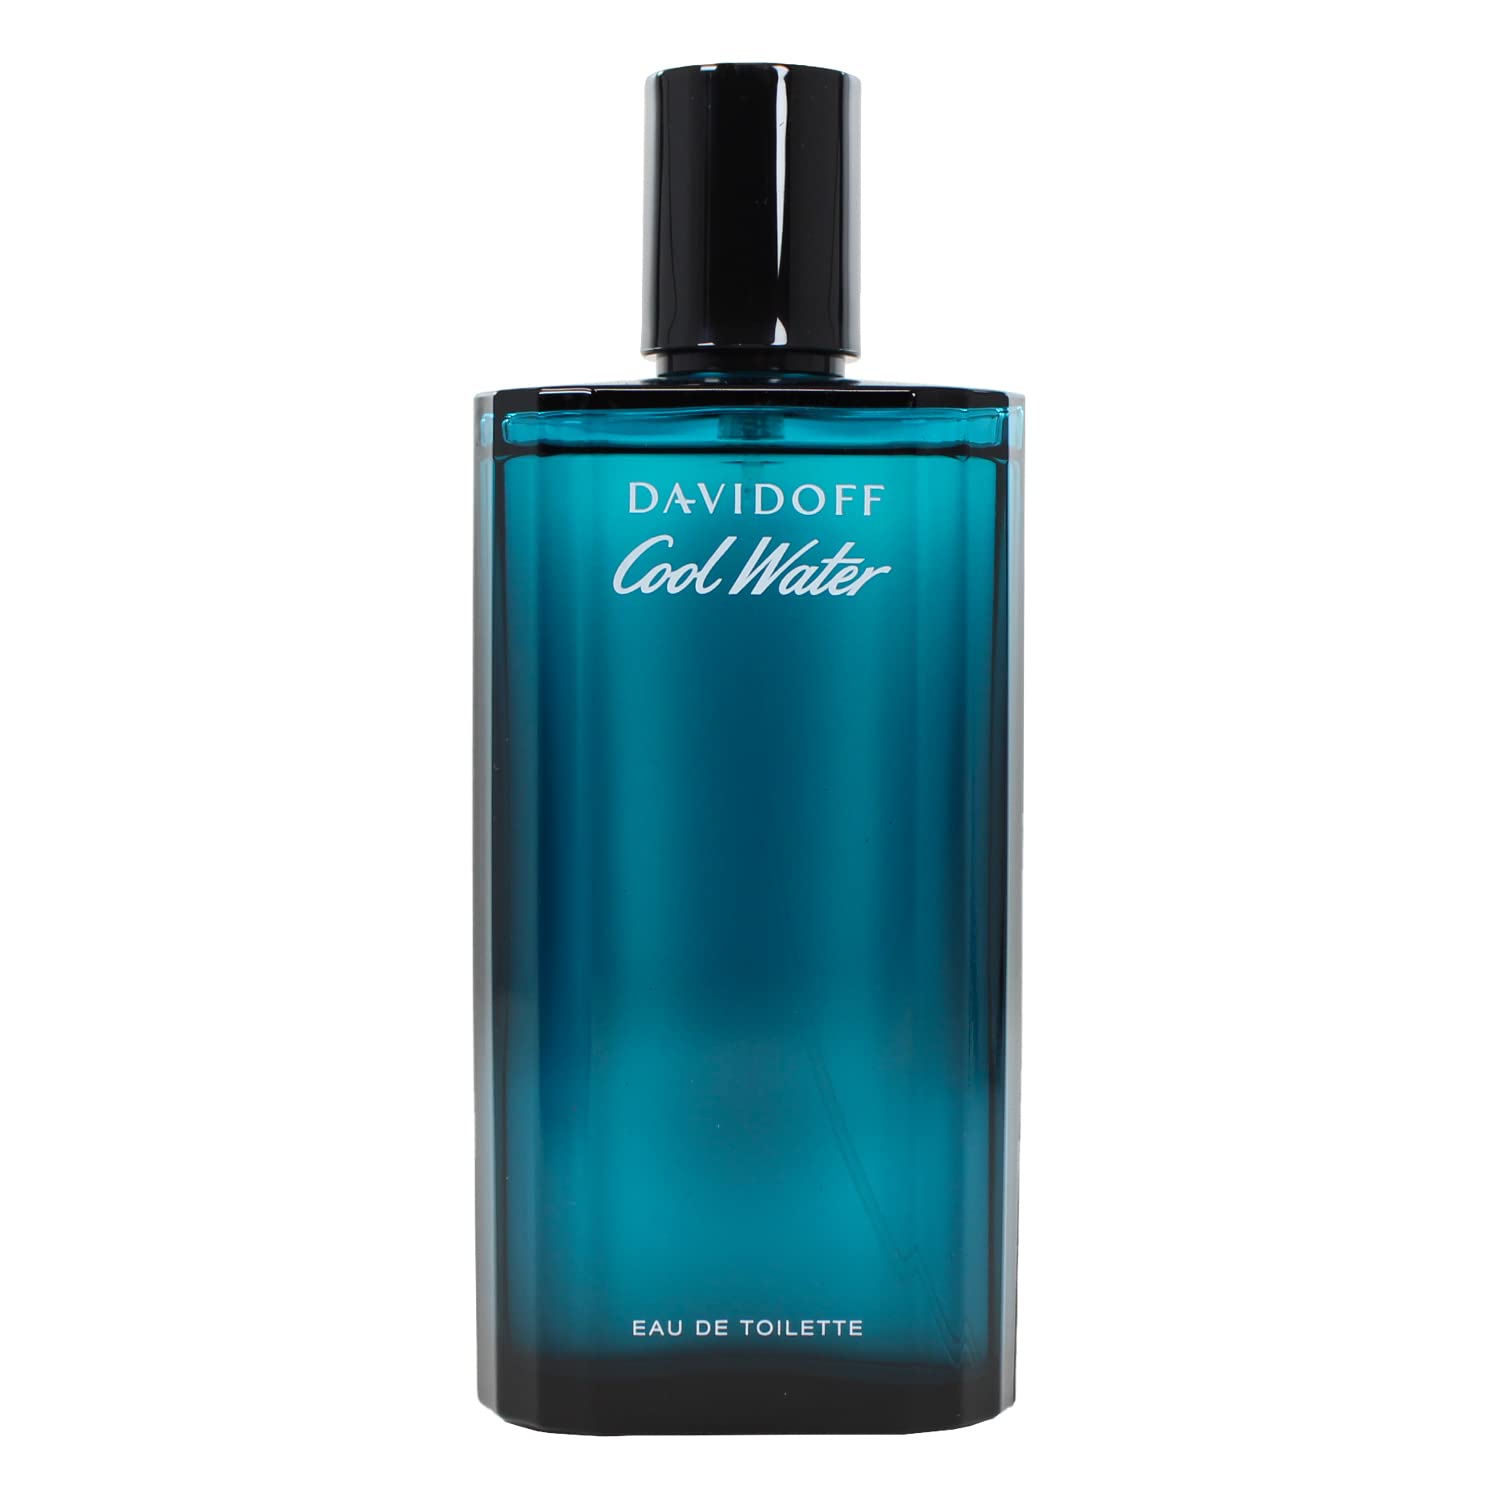 Davidoff Cool Water Edt Spray for Men, 4.2 oz